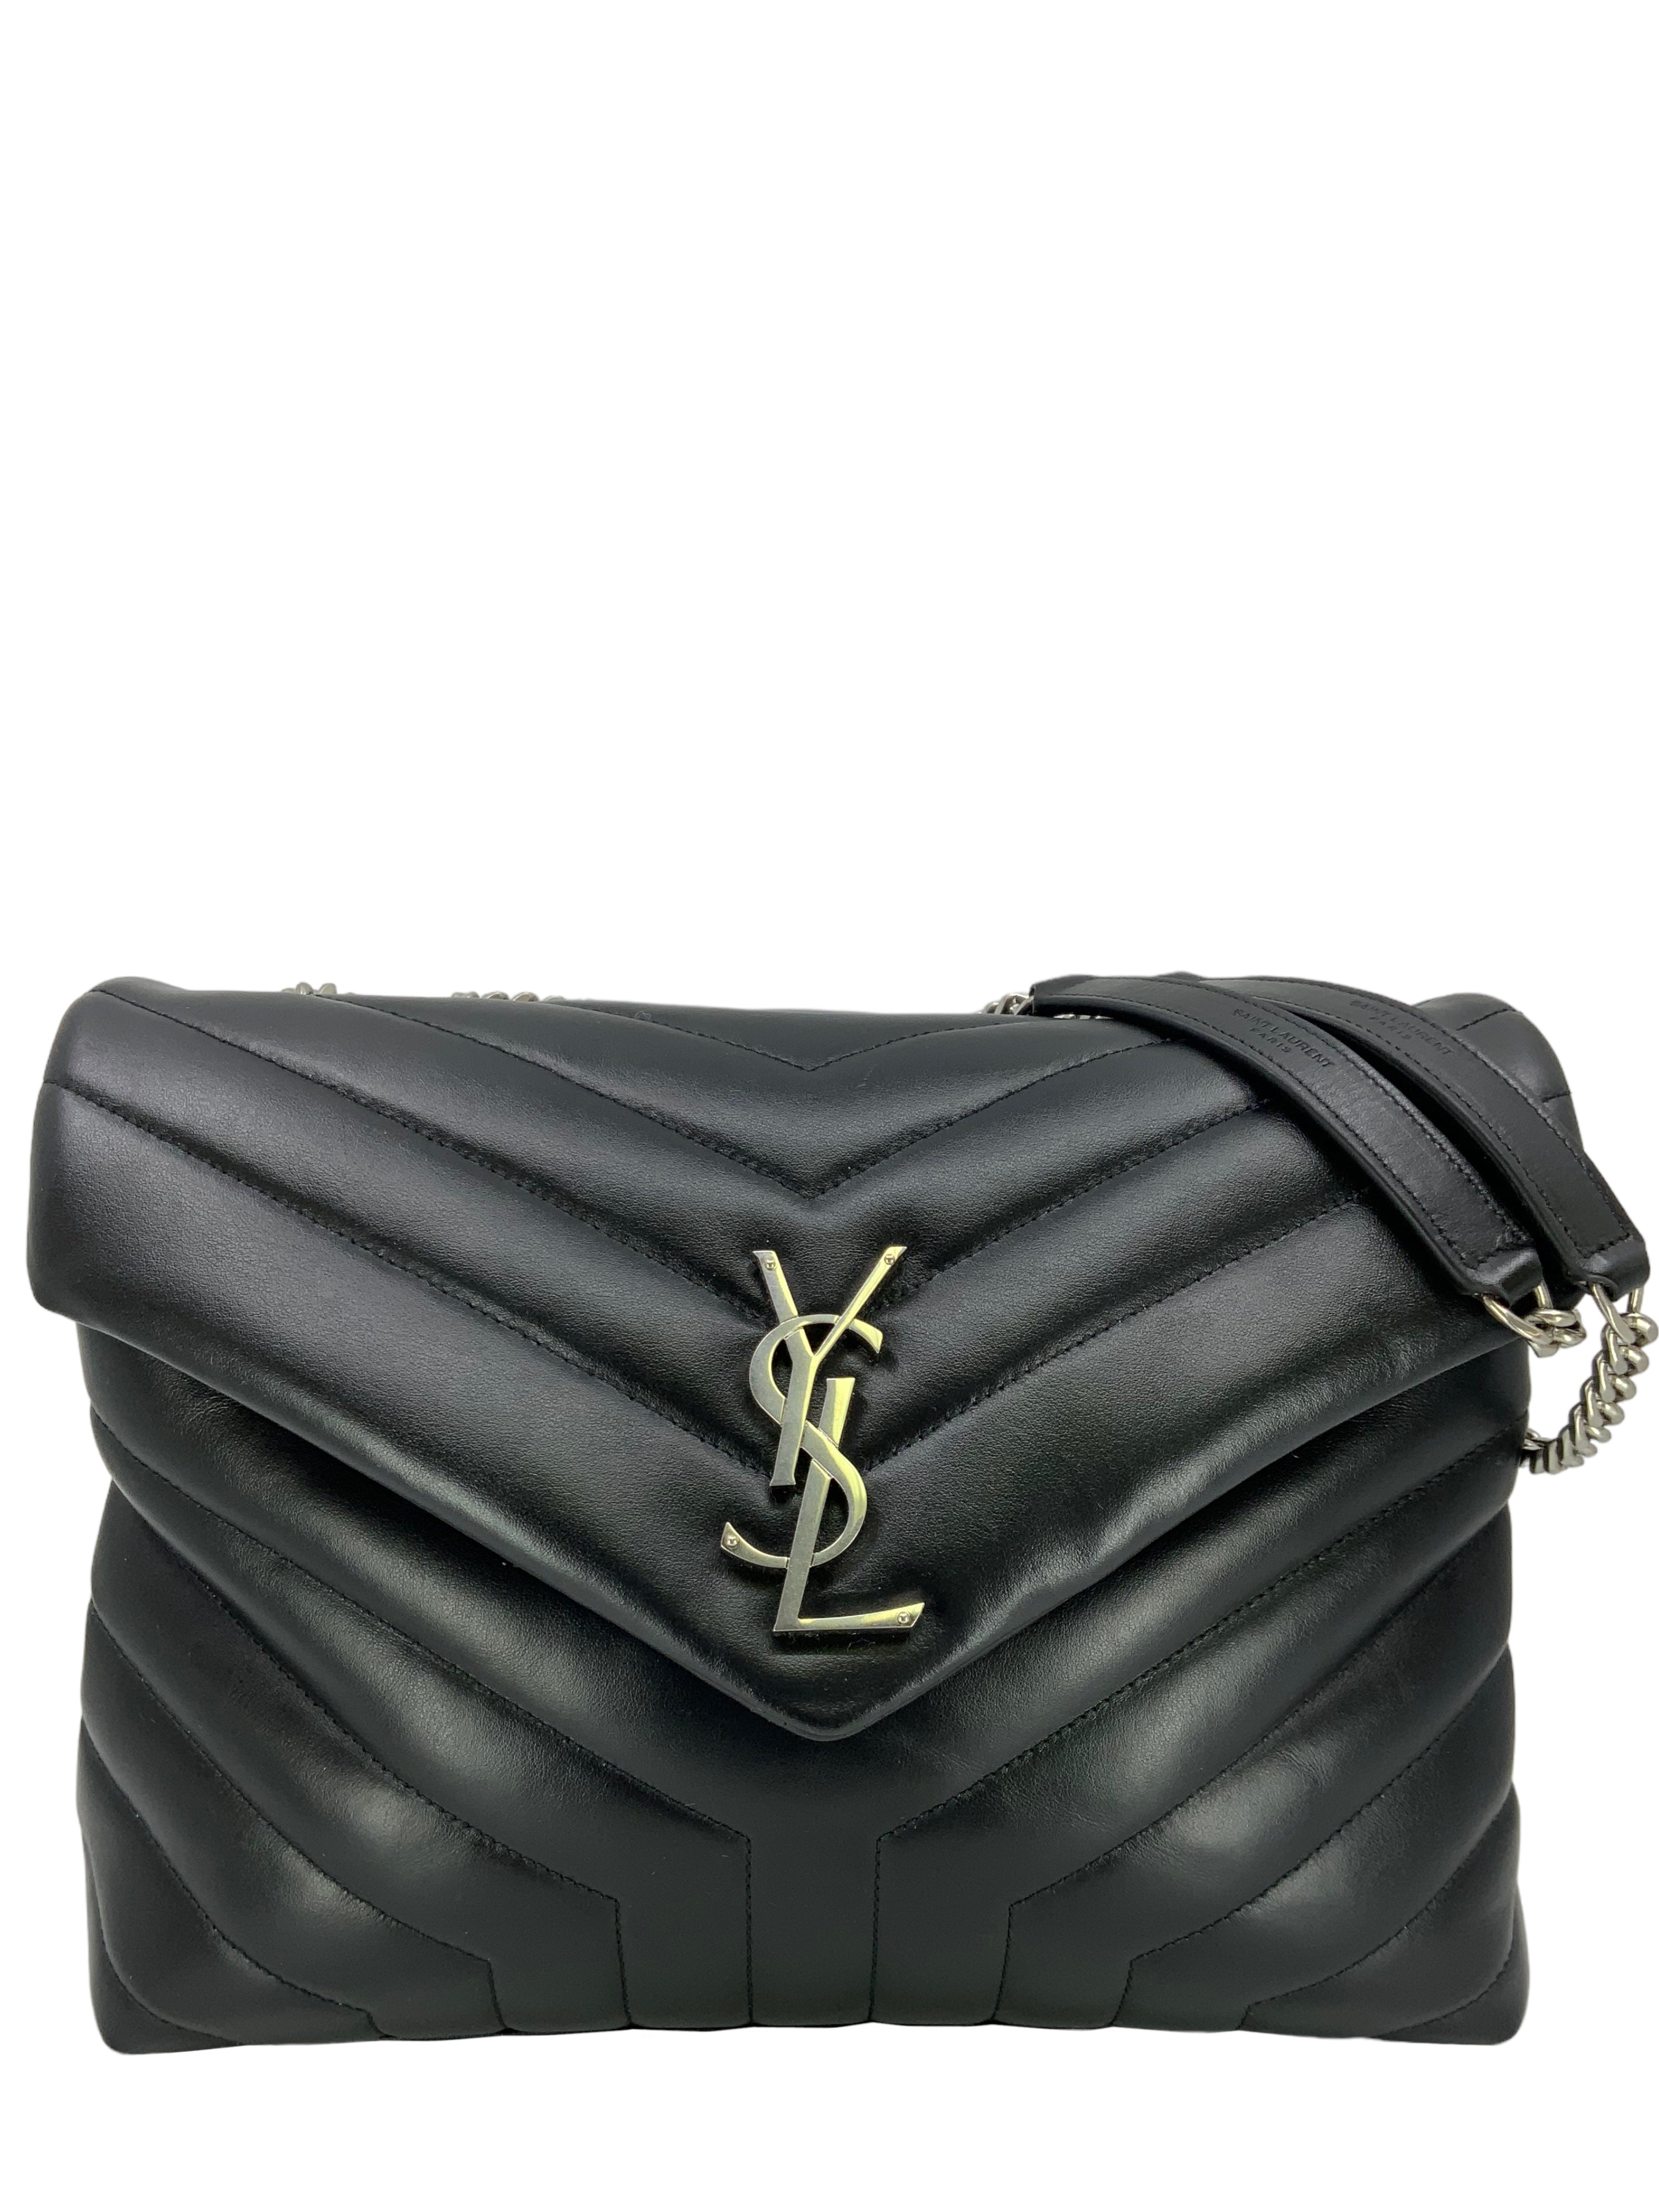 YSL Yves Saint Laurent Silver-Tone Hardware Handbags